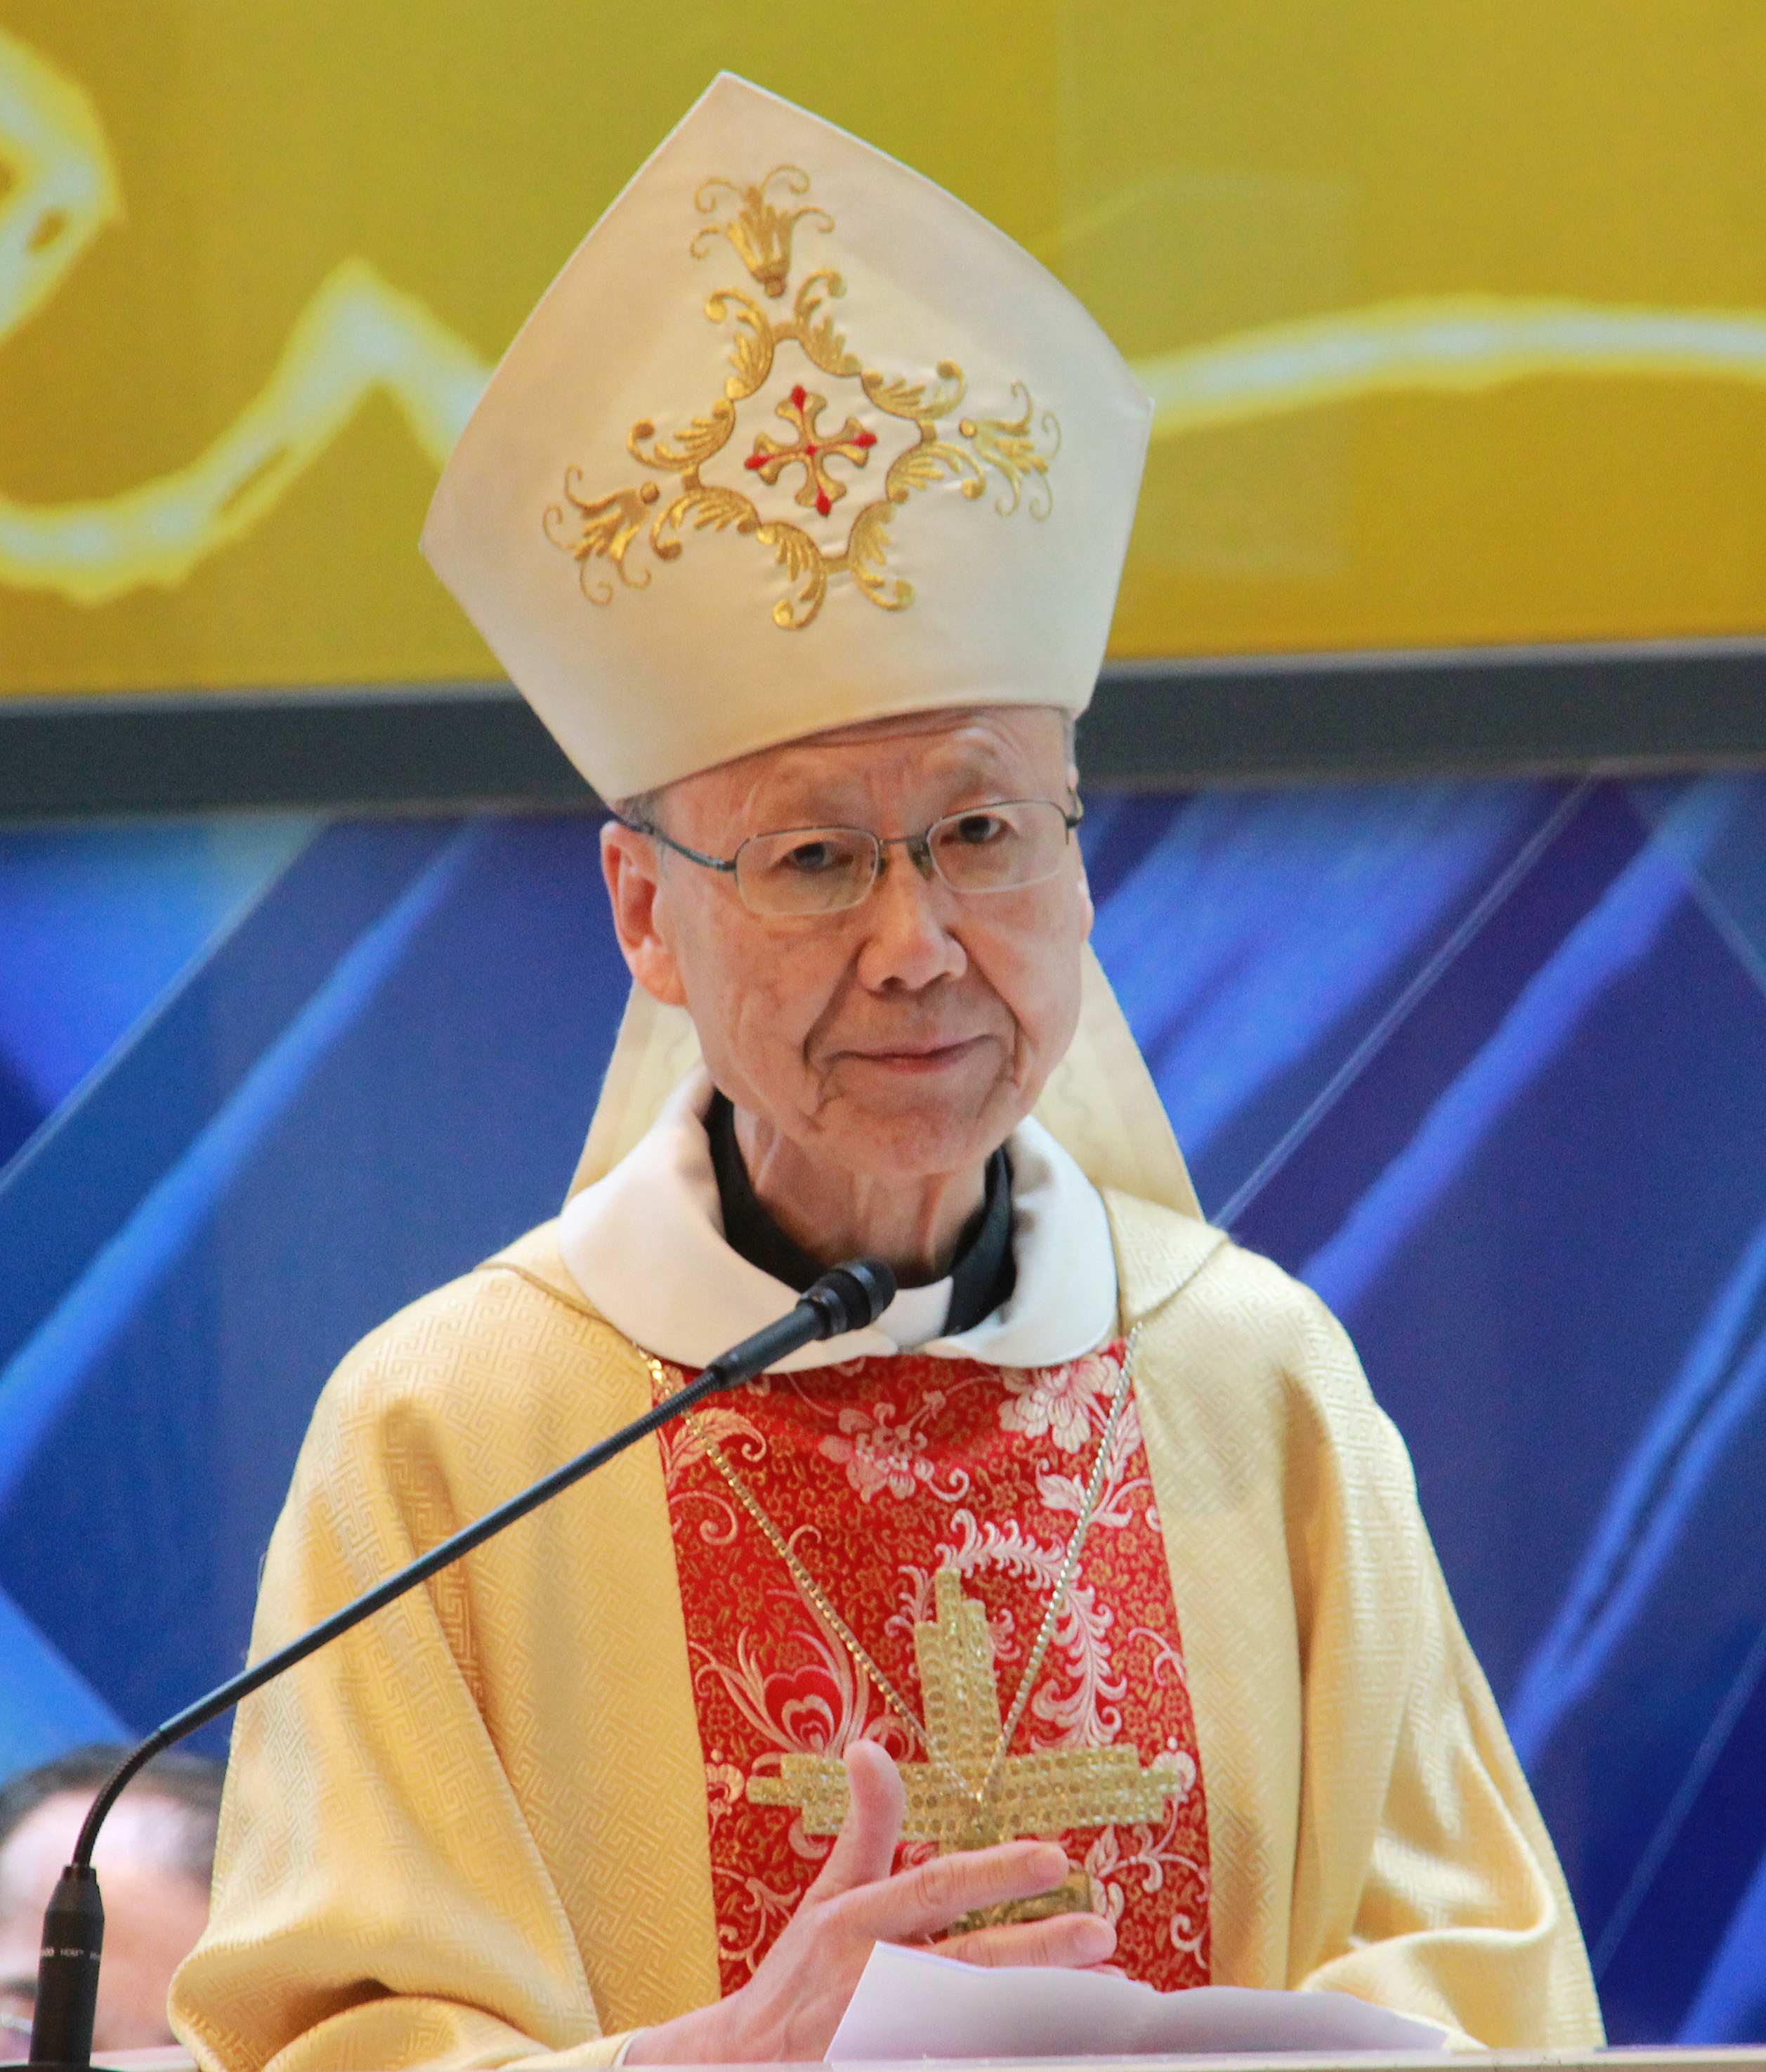 Hong Kong cardinal: Dialogue between Christianity, China indispensable